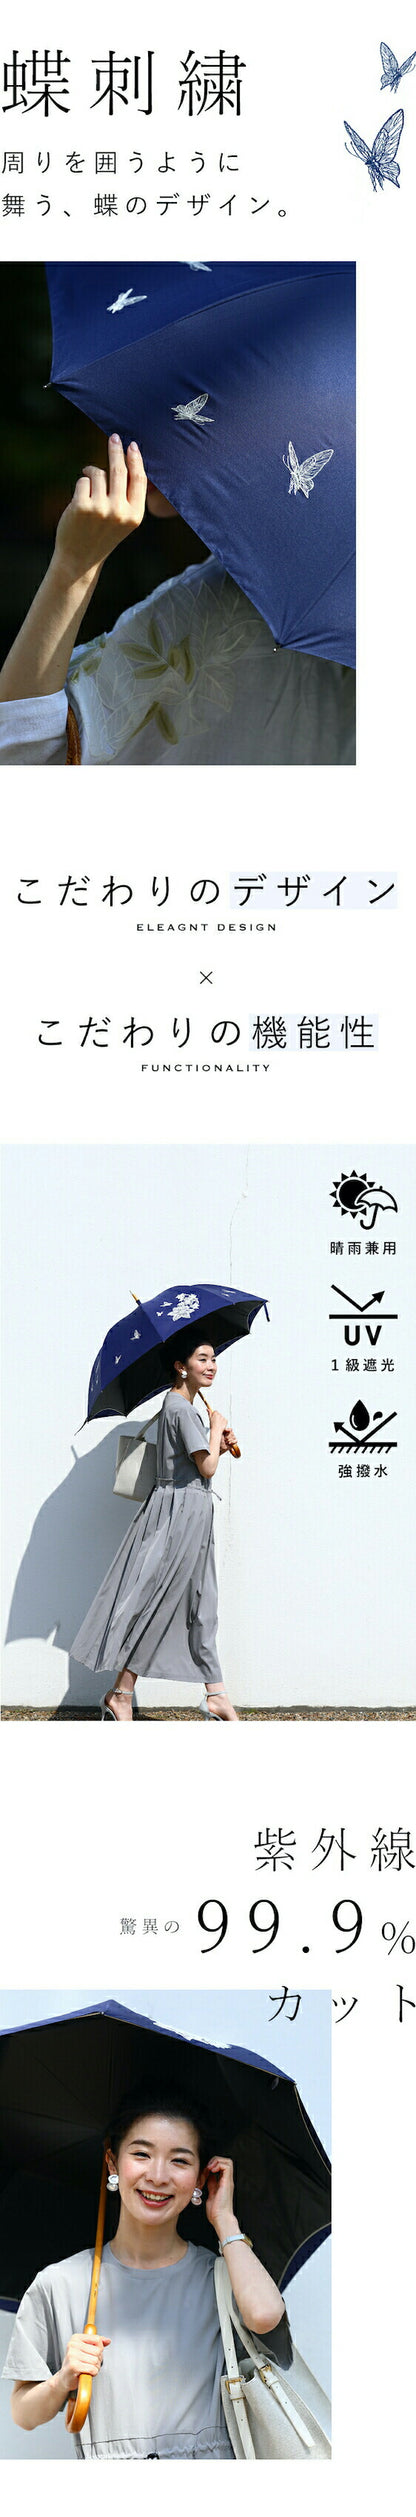 【fne00001】UVカット99.9% 花と蝶舞うコード刺繍の晴雨兼用日傘